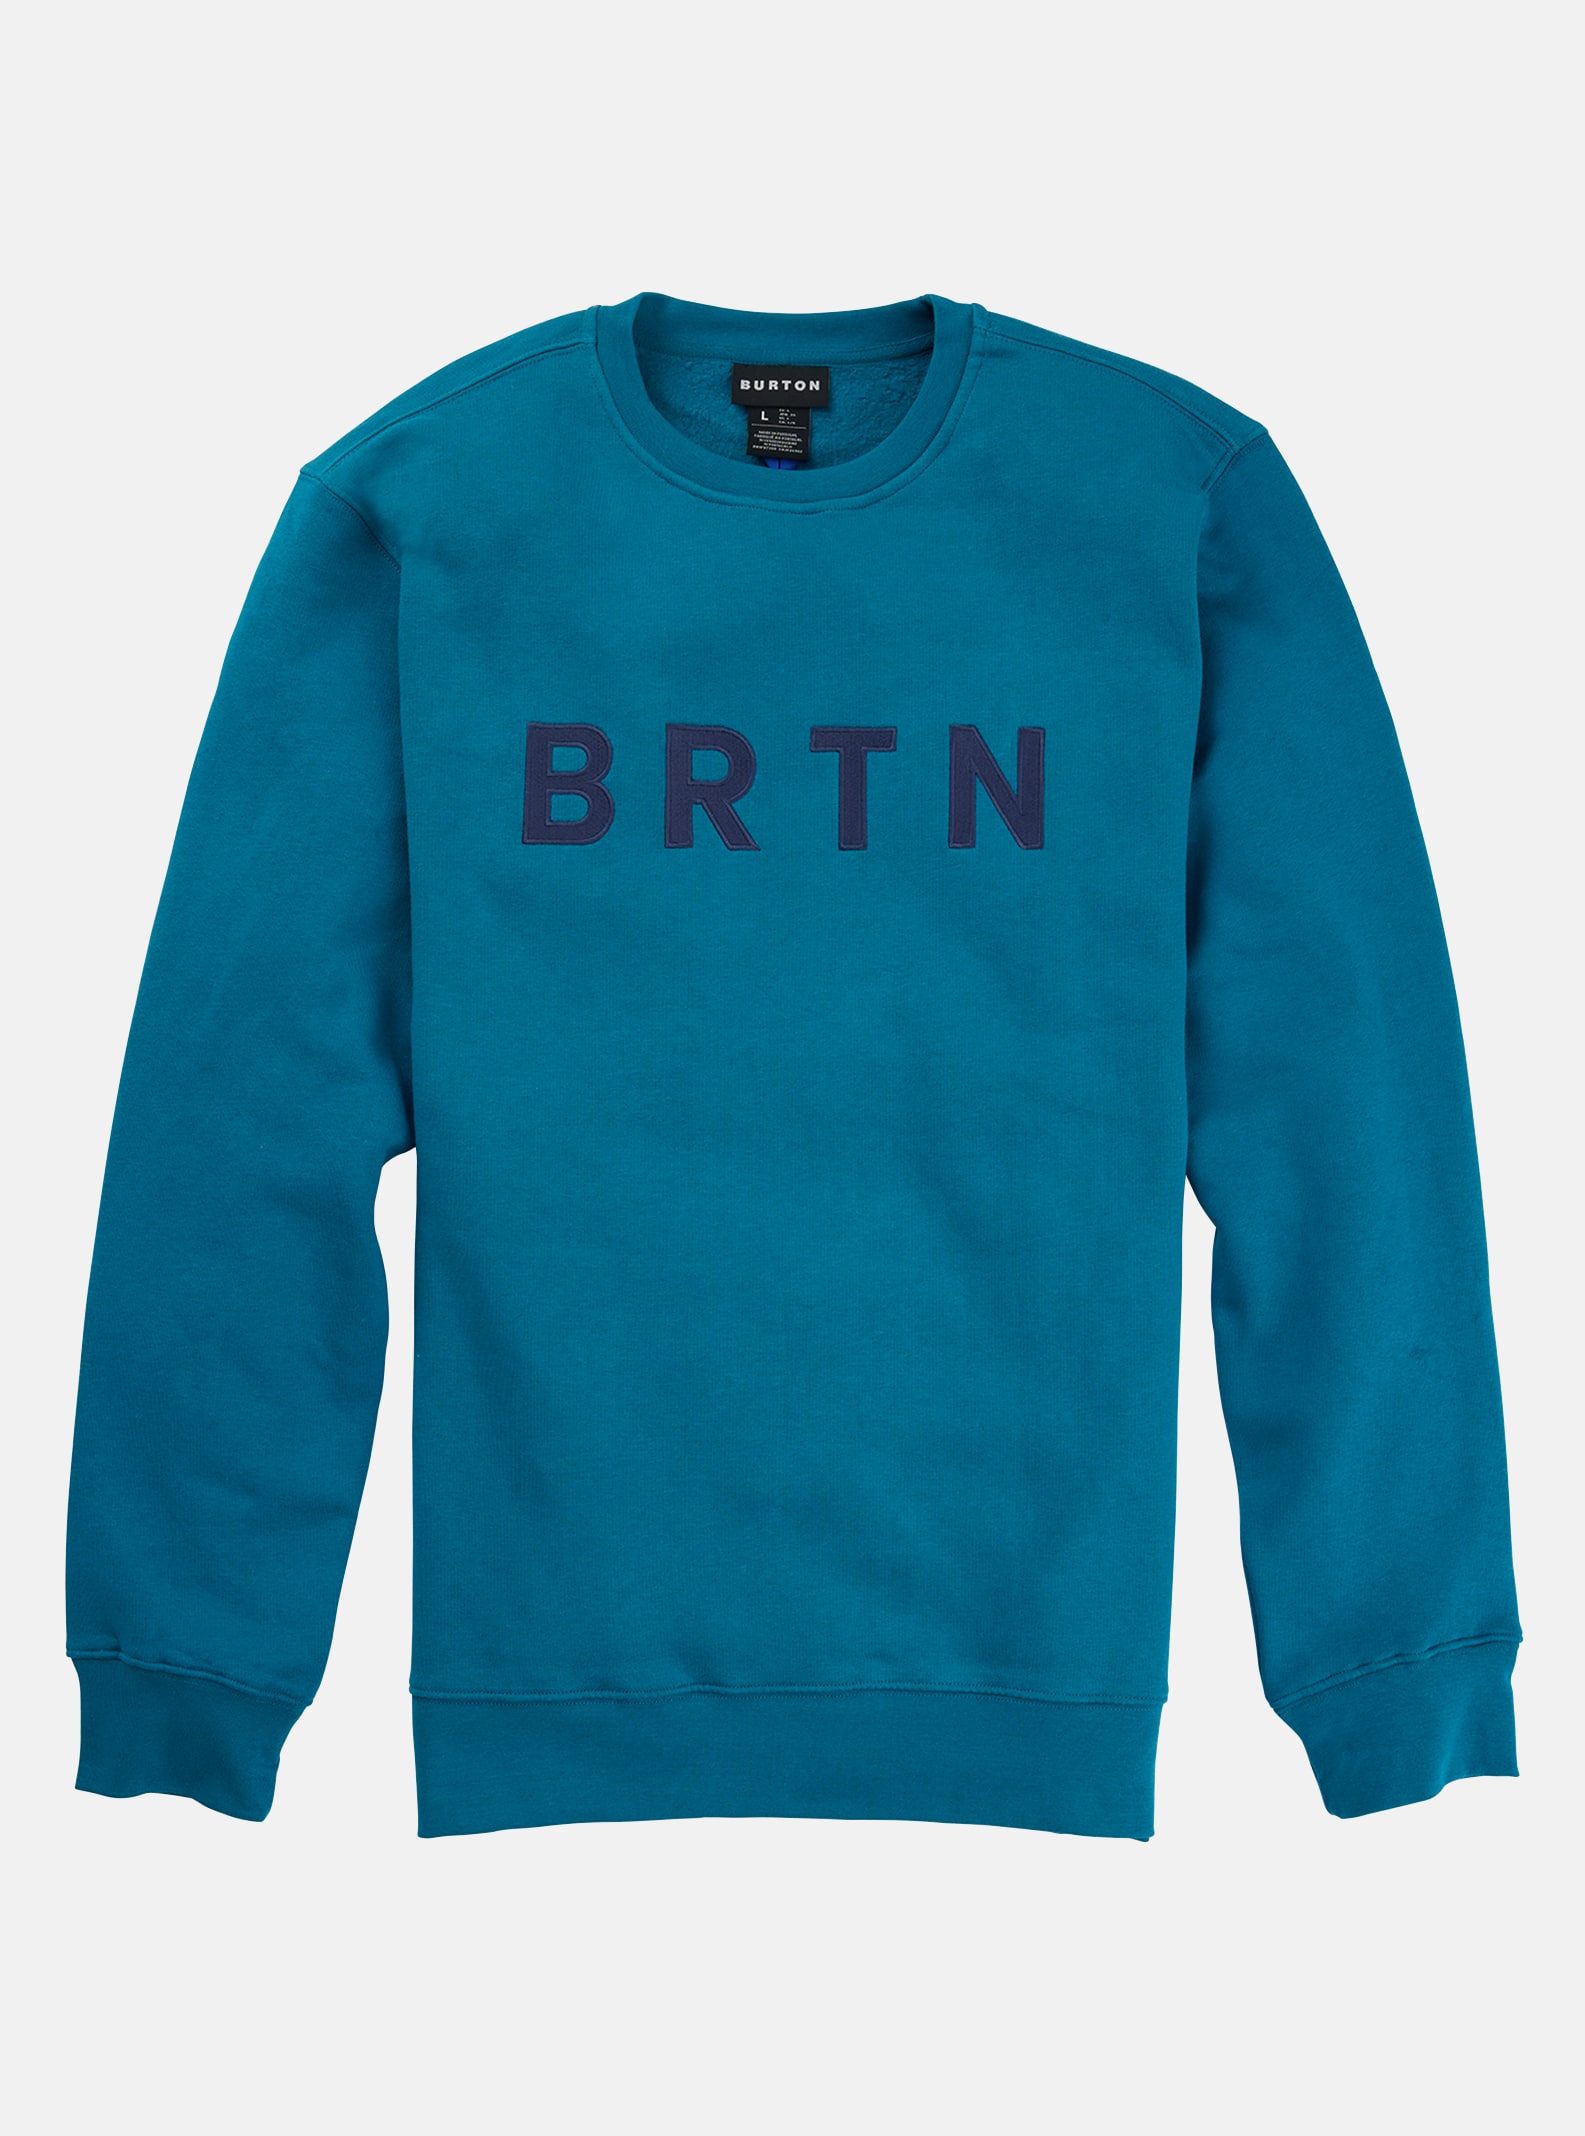 Burton - Sweat ras du cou BRTN, Lyons Blue, S